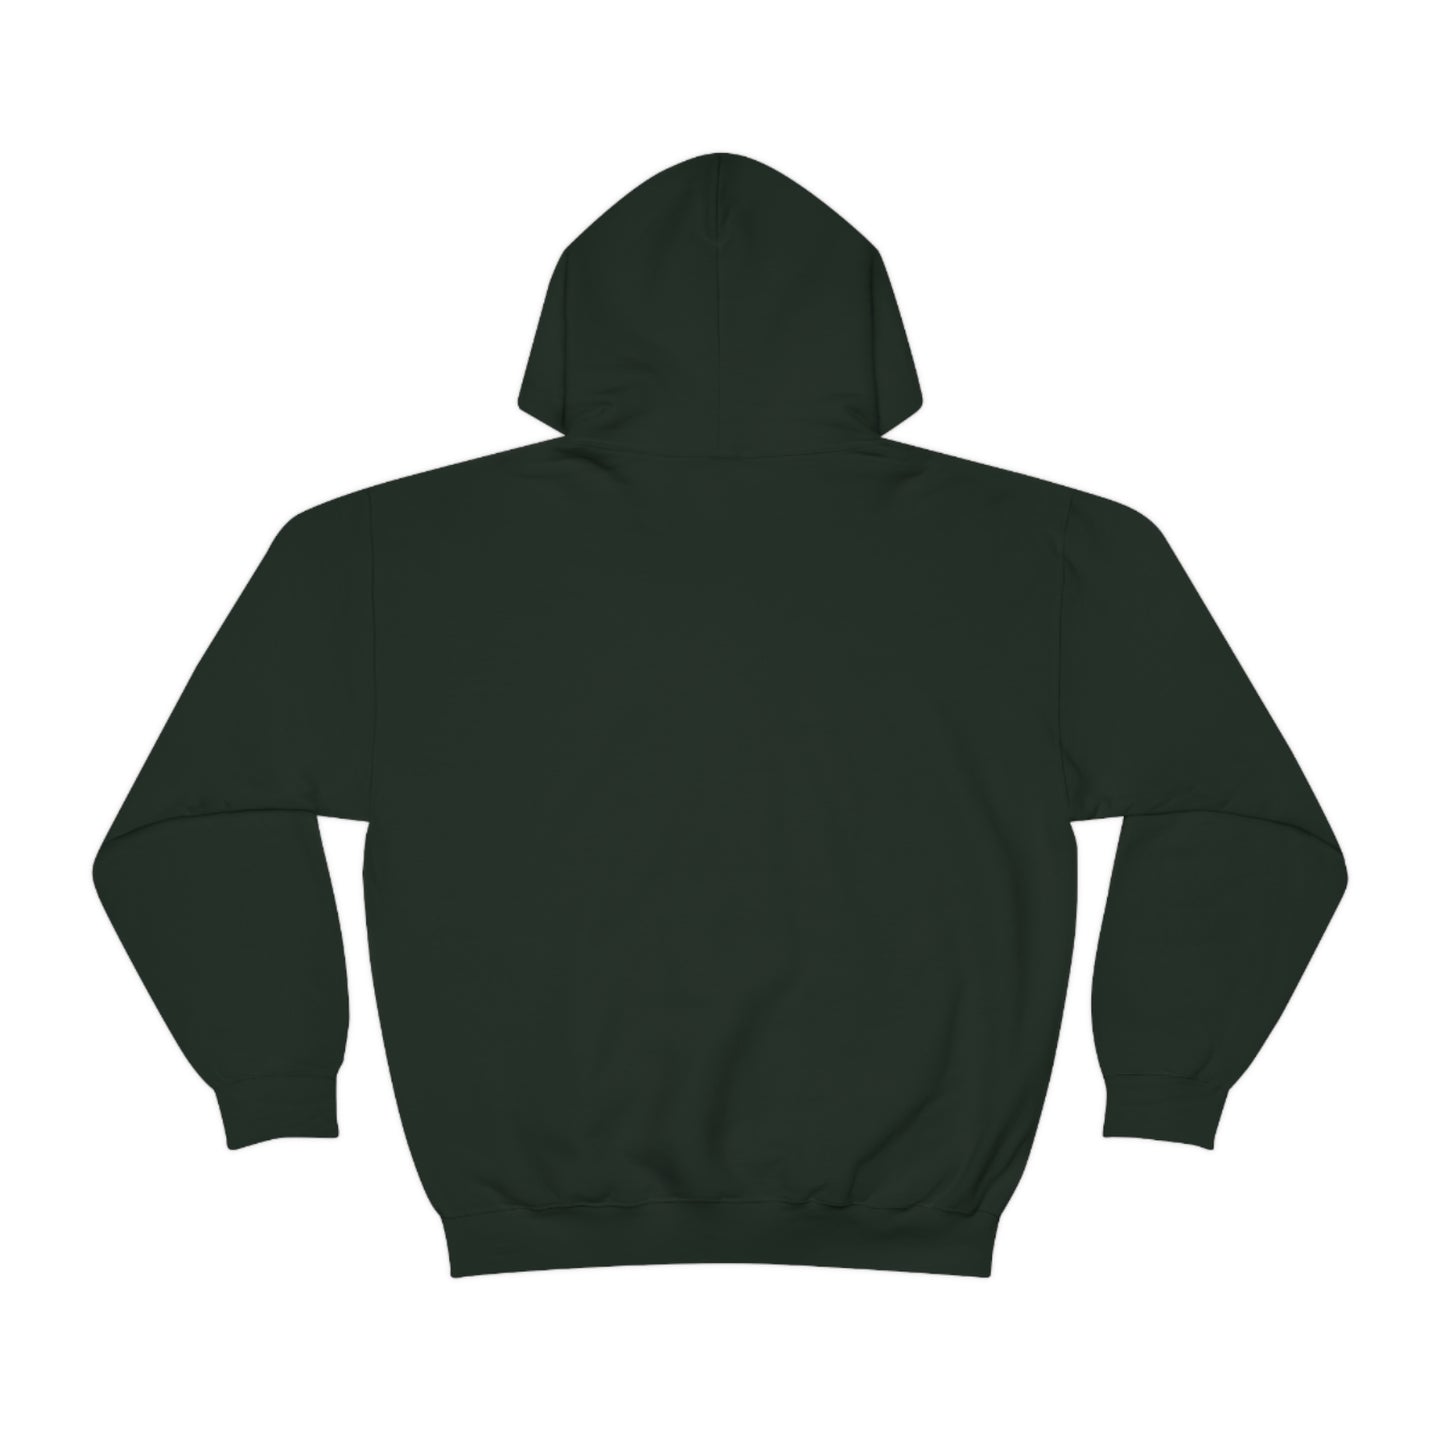 Forager Unisex Heavy Blend™ Hooded Sweatshirt